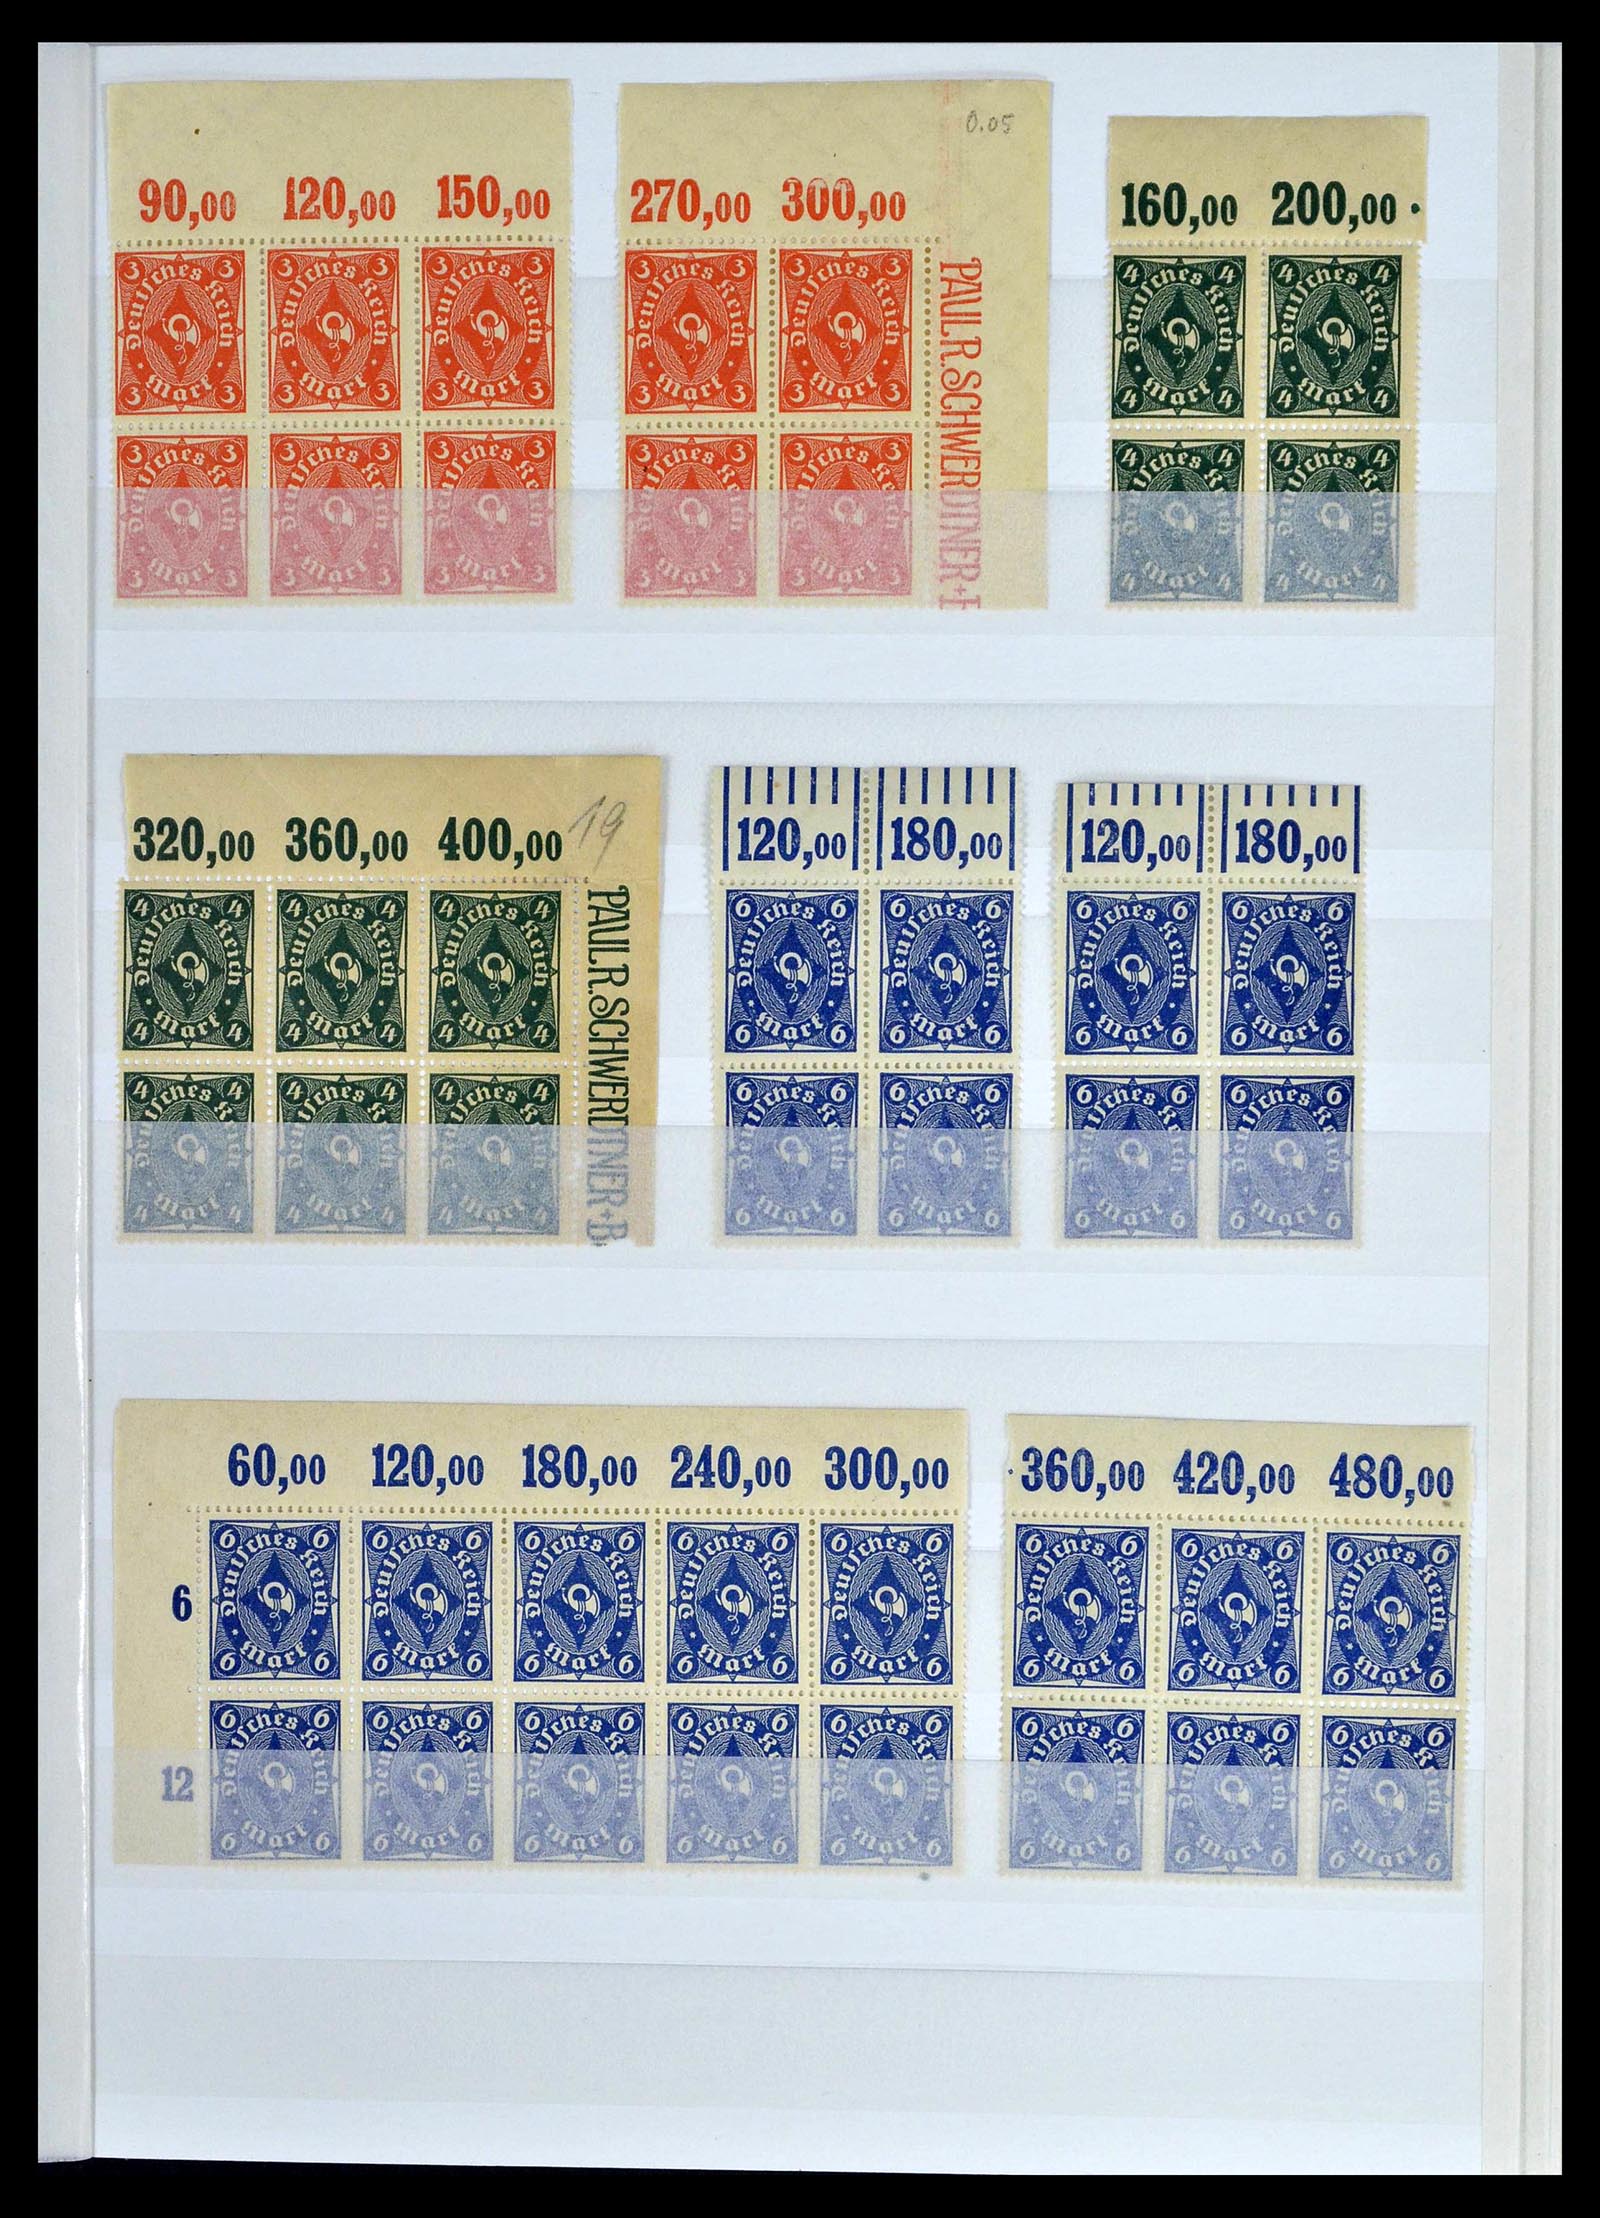 39254 0025 - Stamp collection 39254 German Reich MNH top margins.